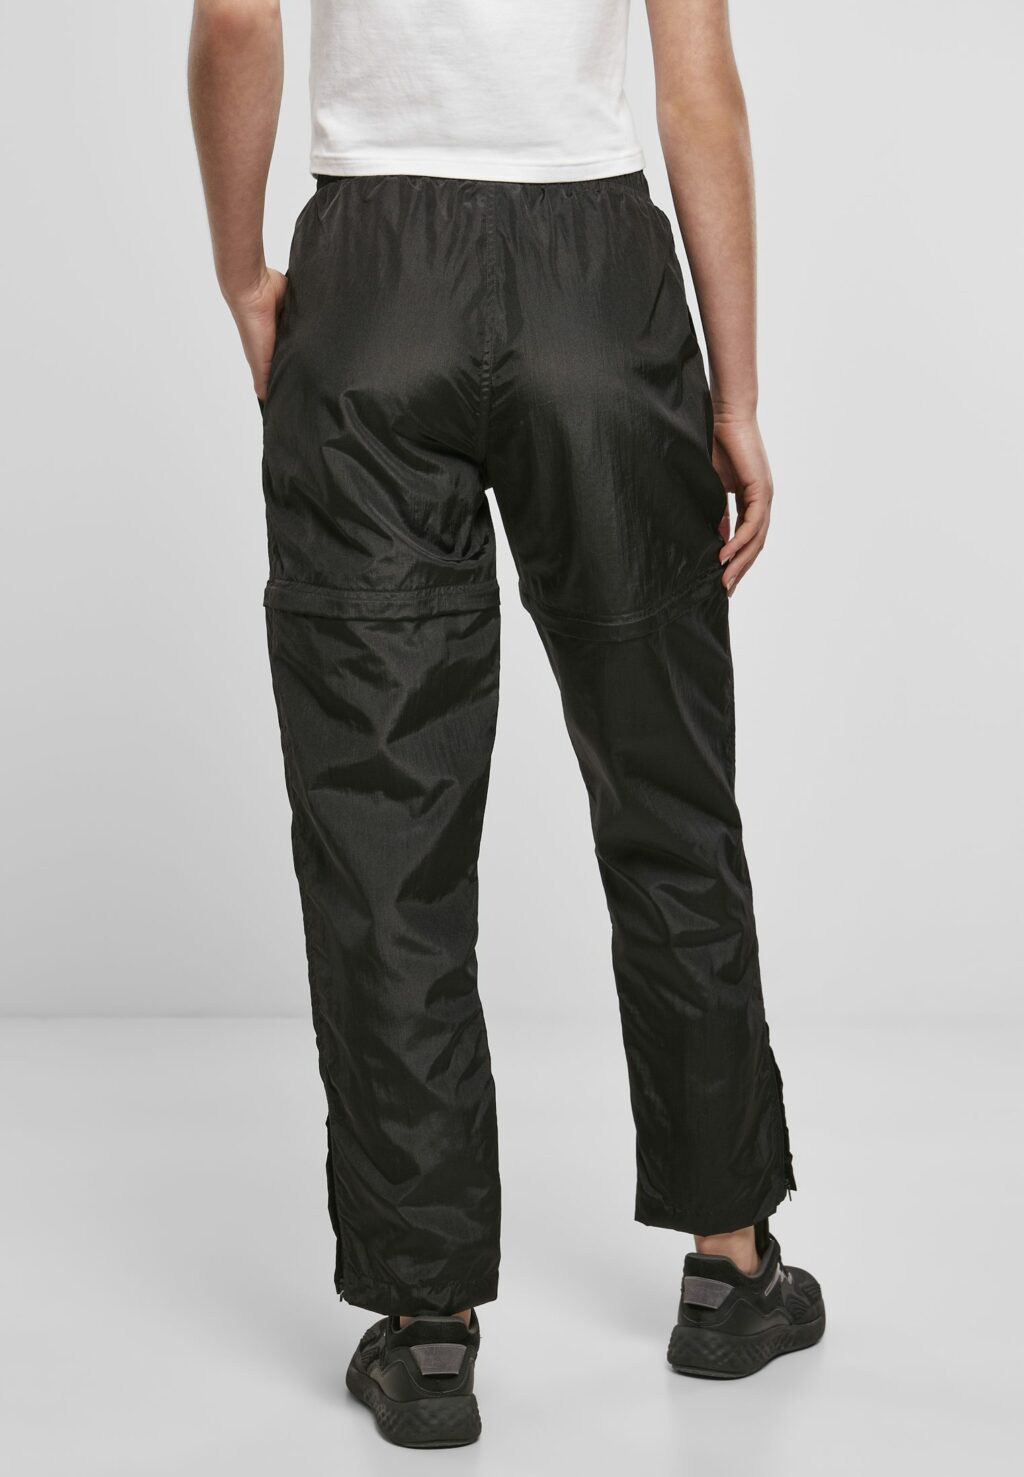 Urban Classics Ladies Shiny Crinkle Nylon Zip Pants black TB4079